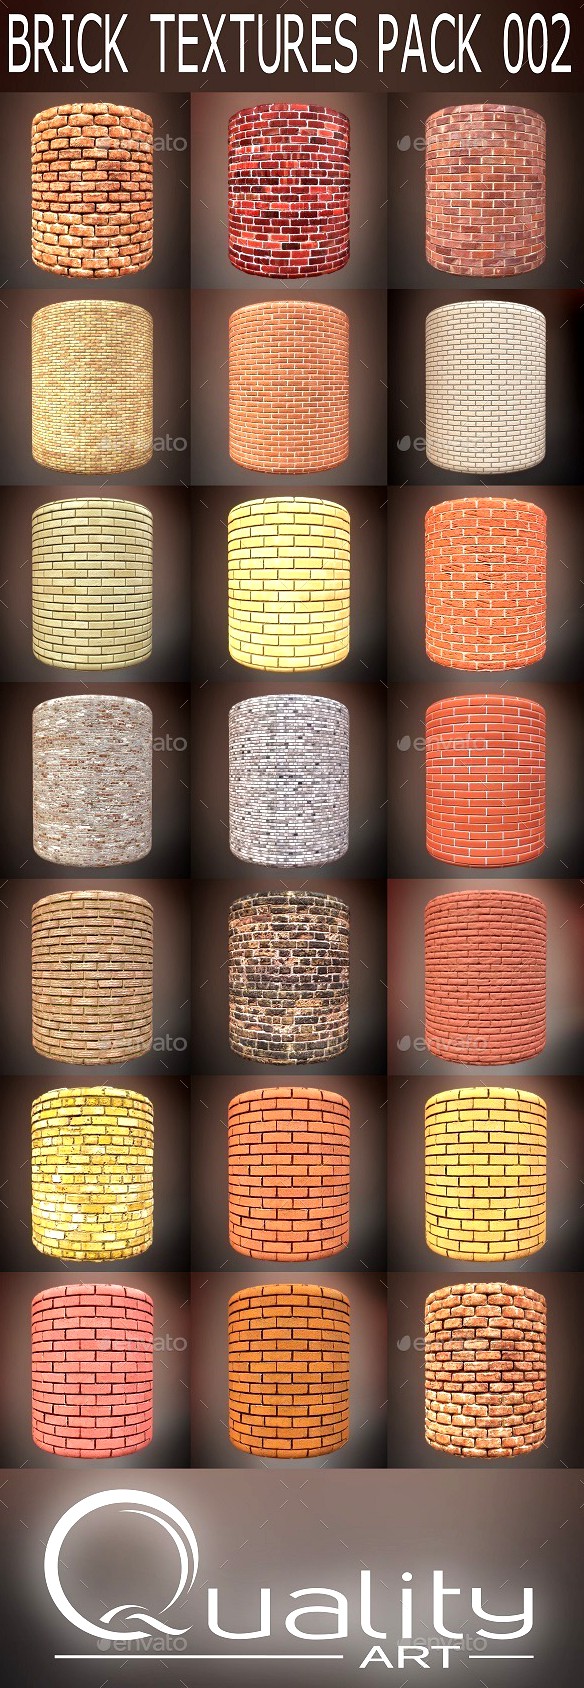 Brick Textures Pack 002